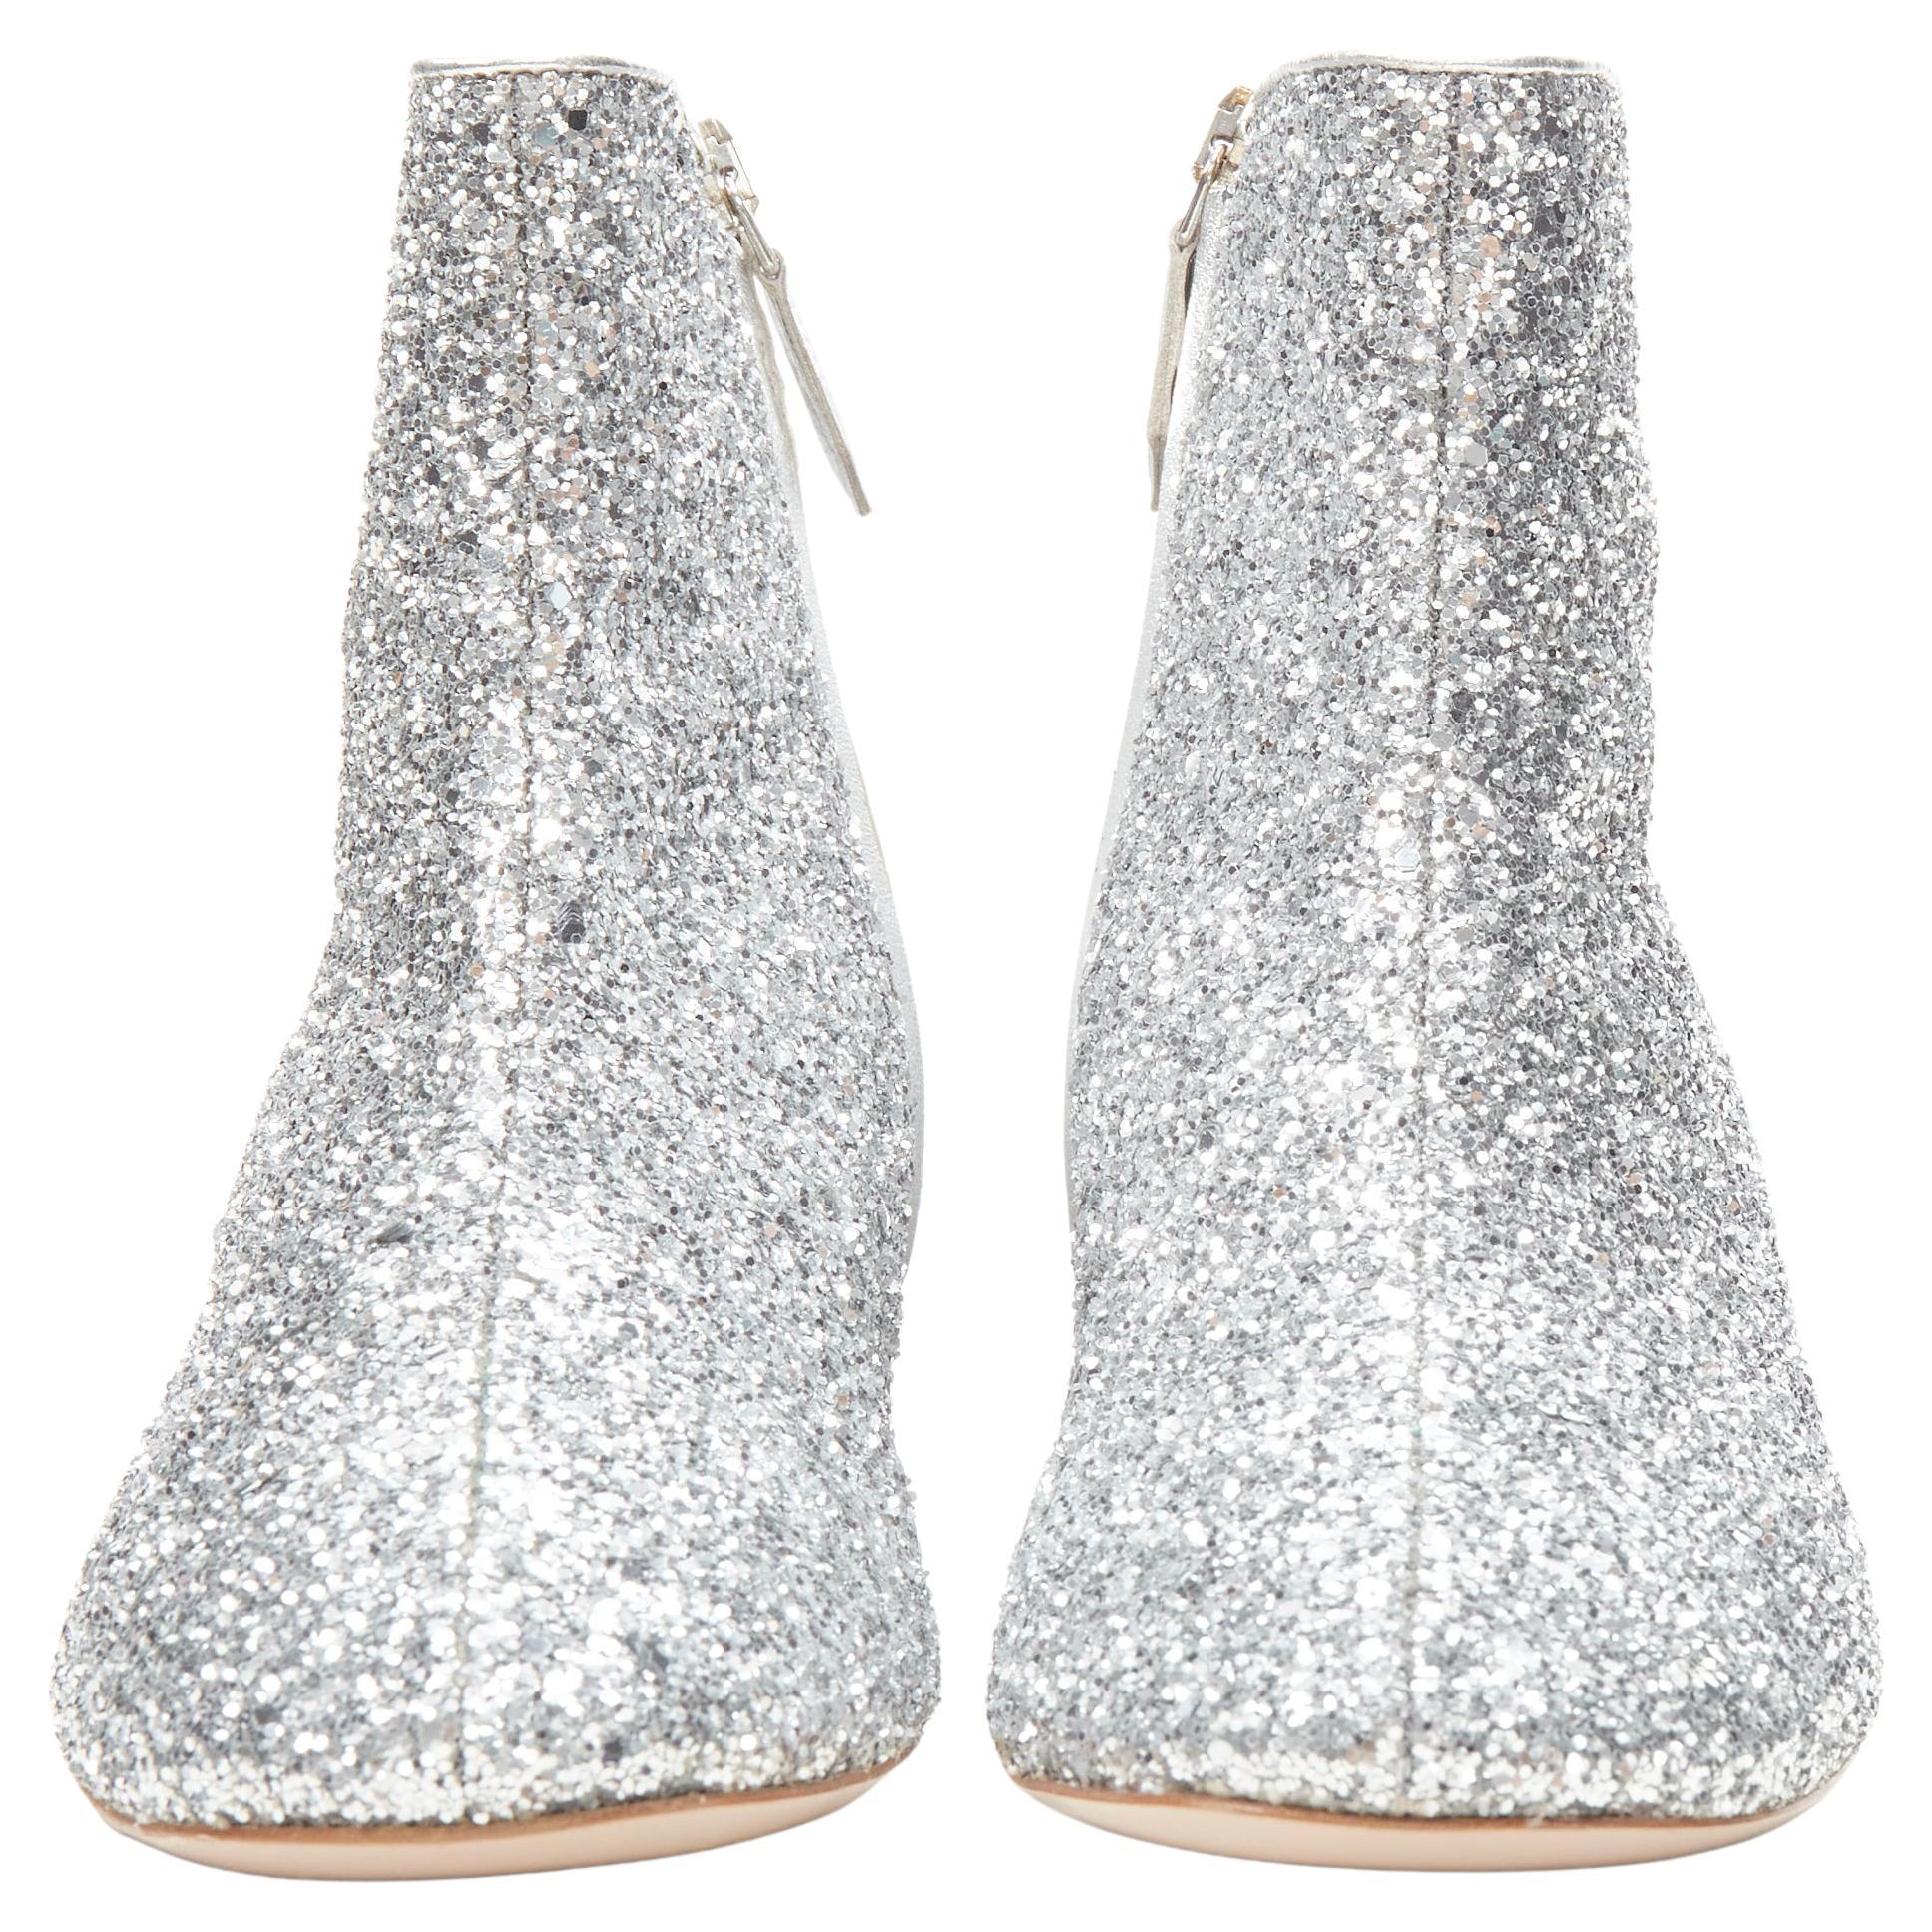 new MIU MIU silver glitter large rhinestone crystal heel ankle boots EU37.5
Brand: Miu Miu
Designer: Miuccia Prada
Material: Leather
Color: Silver
Pattern: Solid
Closure: Zip
Extra Detail: Round toe ankle bootie. Silver course glitter covered